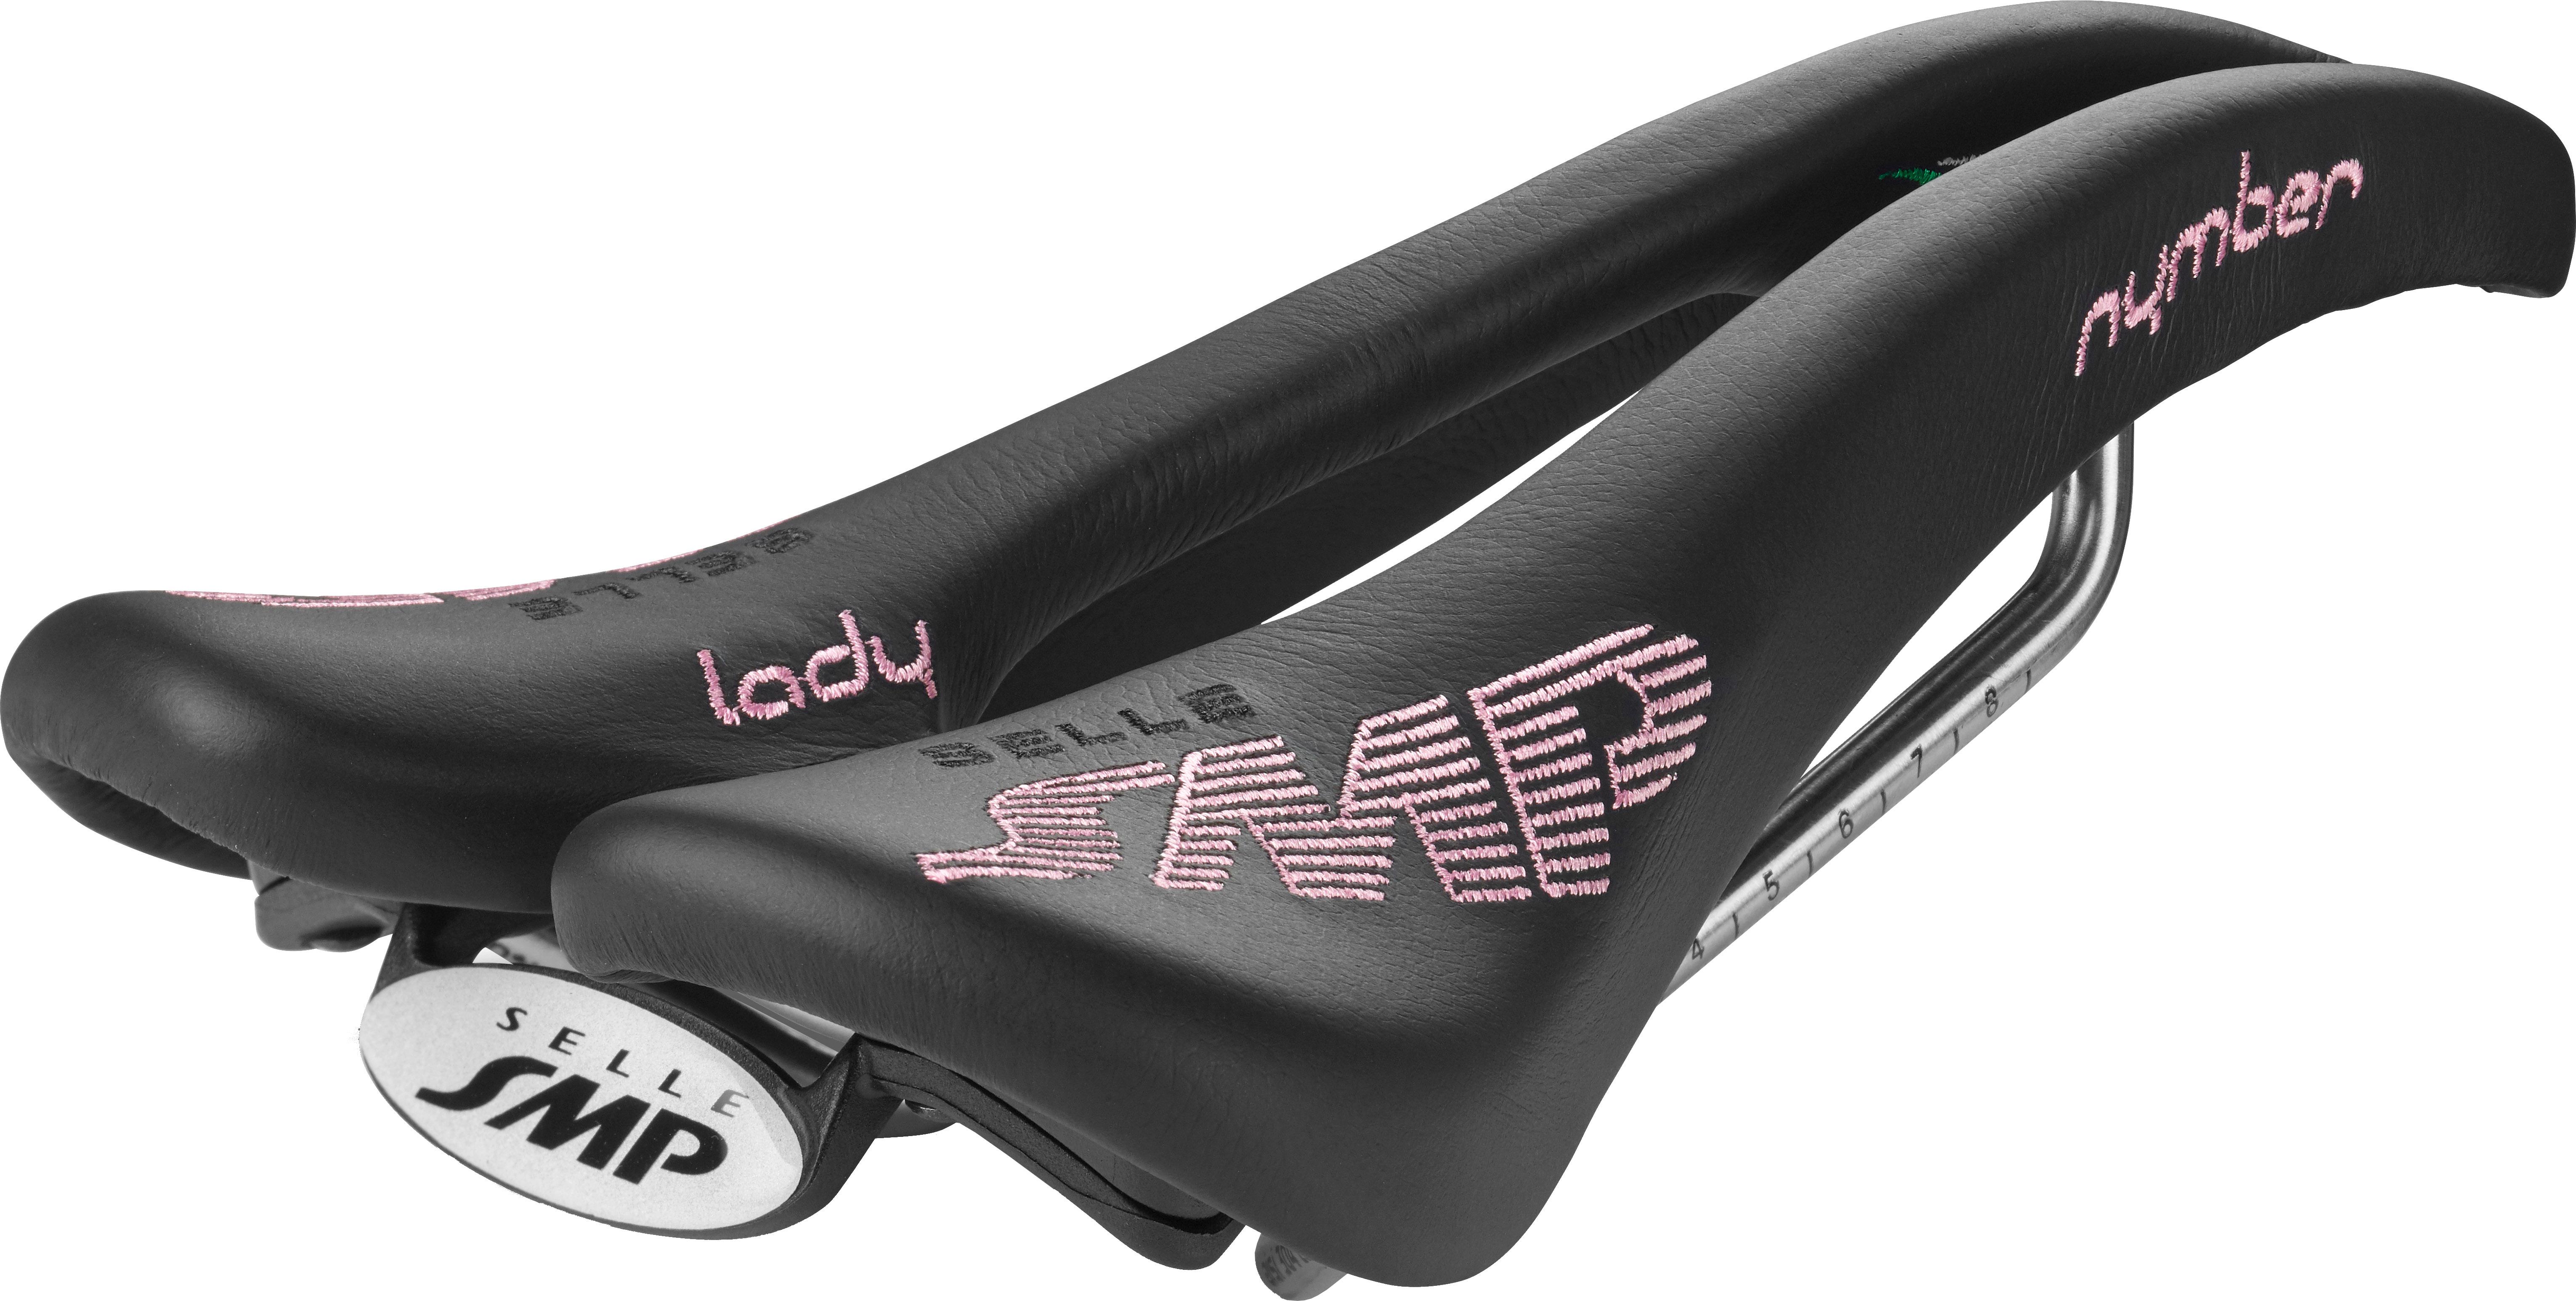 Selle Smp Nymber Ladyline Womens Bike Saddle  Black